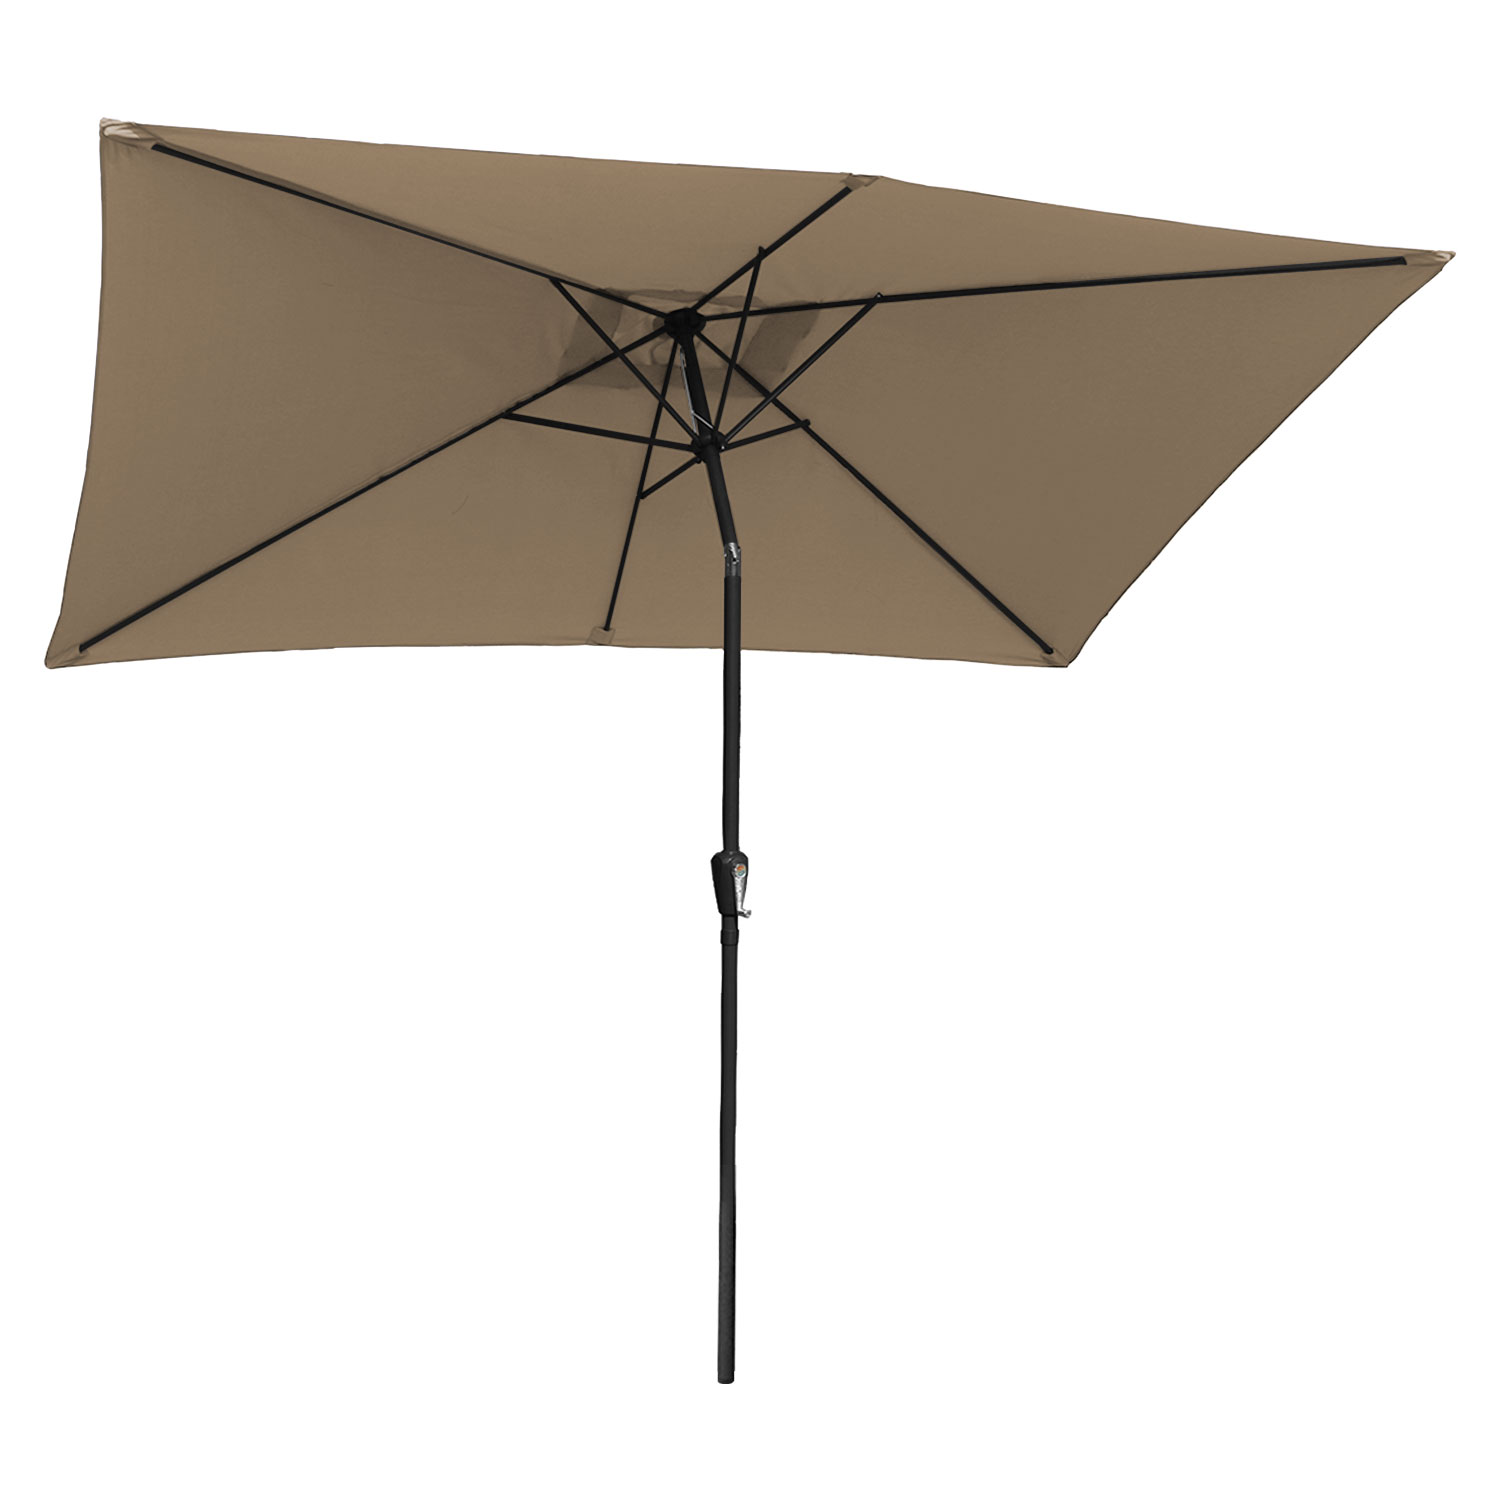 HAPUNA rechthoekige rechte paraplu 2x3m taupe